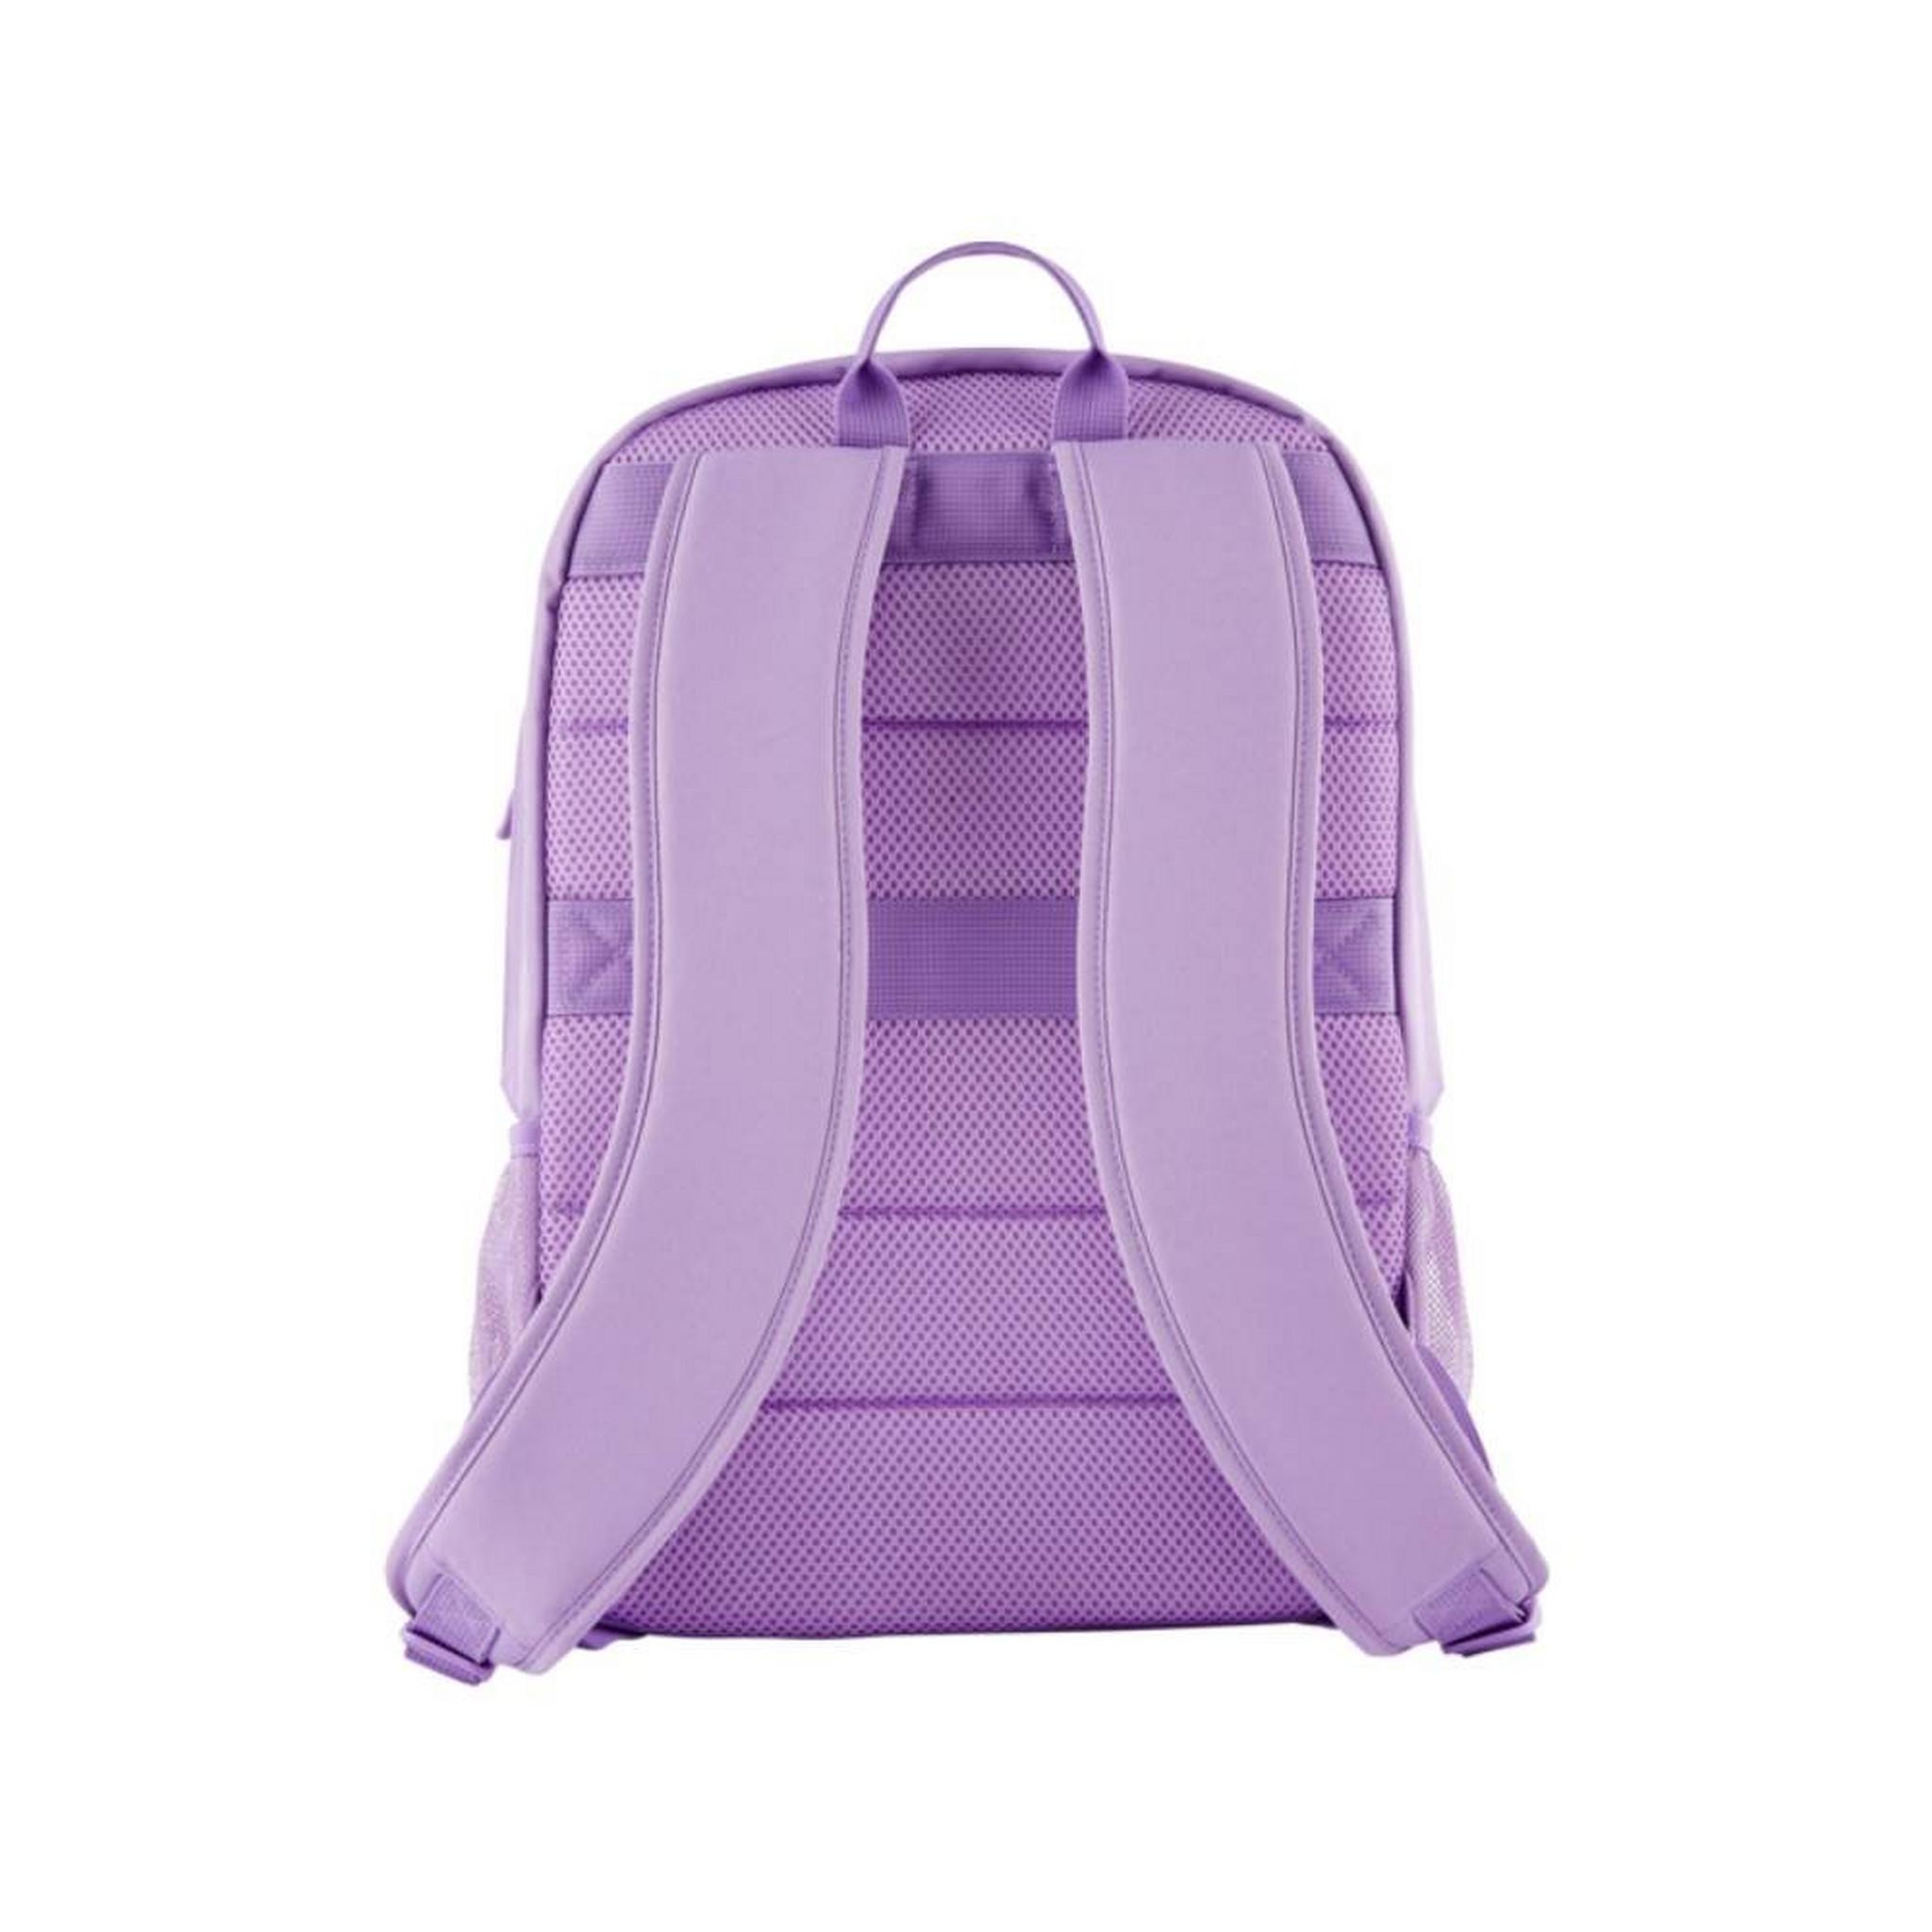 HP Campus Laptop Backpack, 7J597AA - Lavender